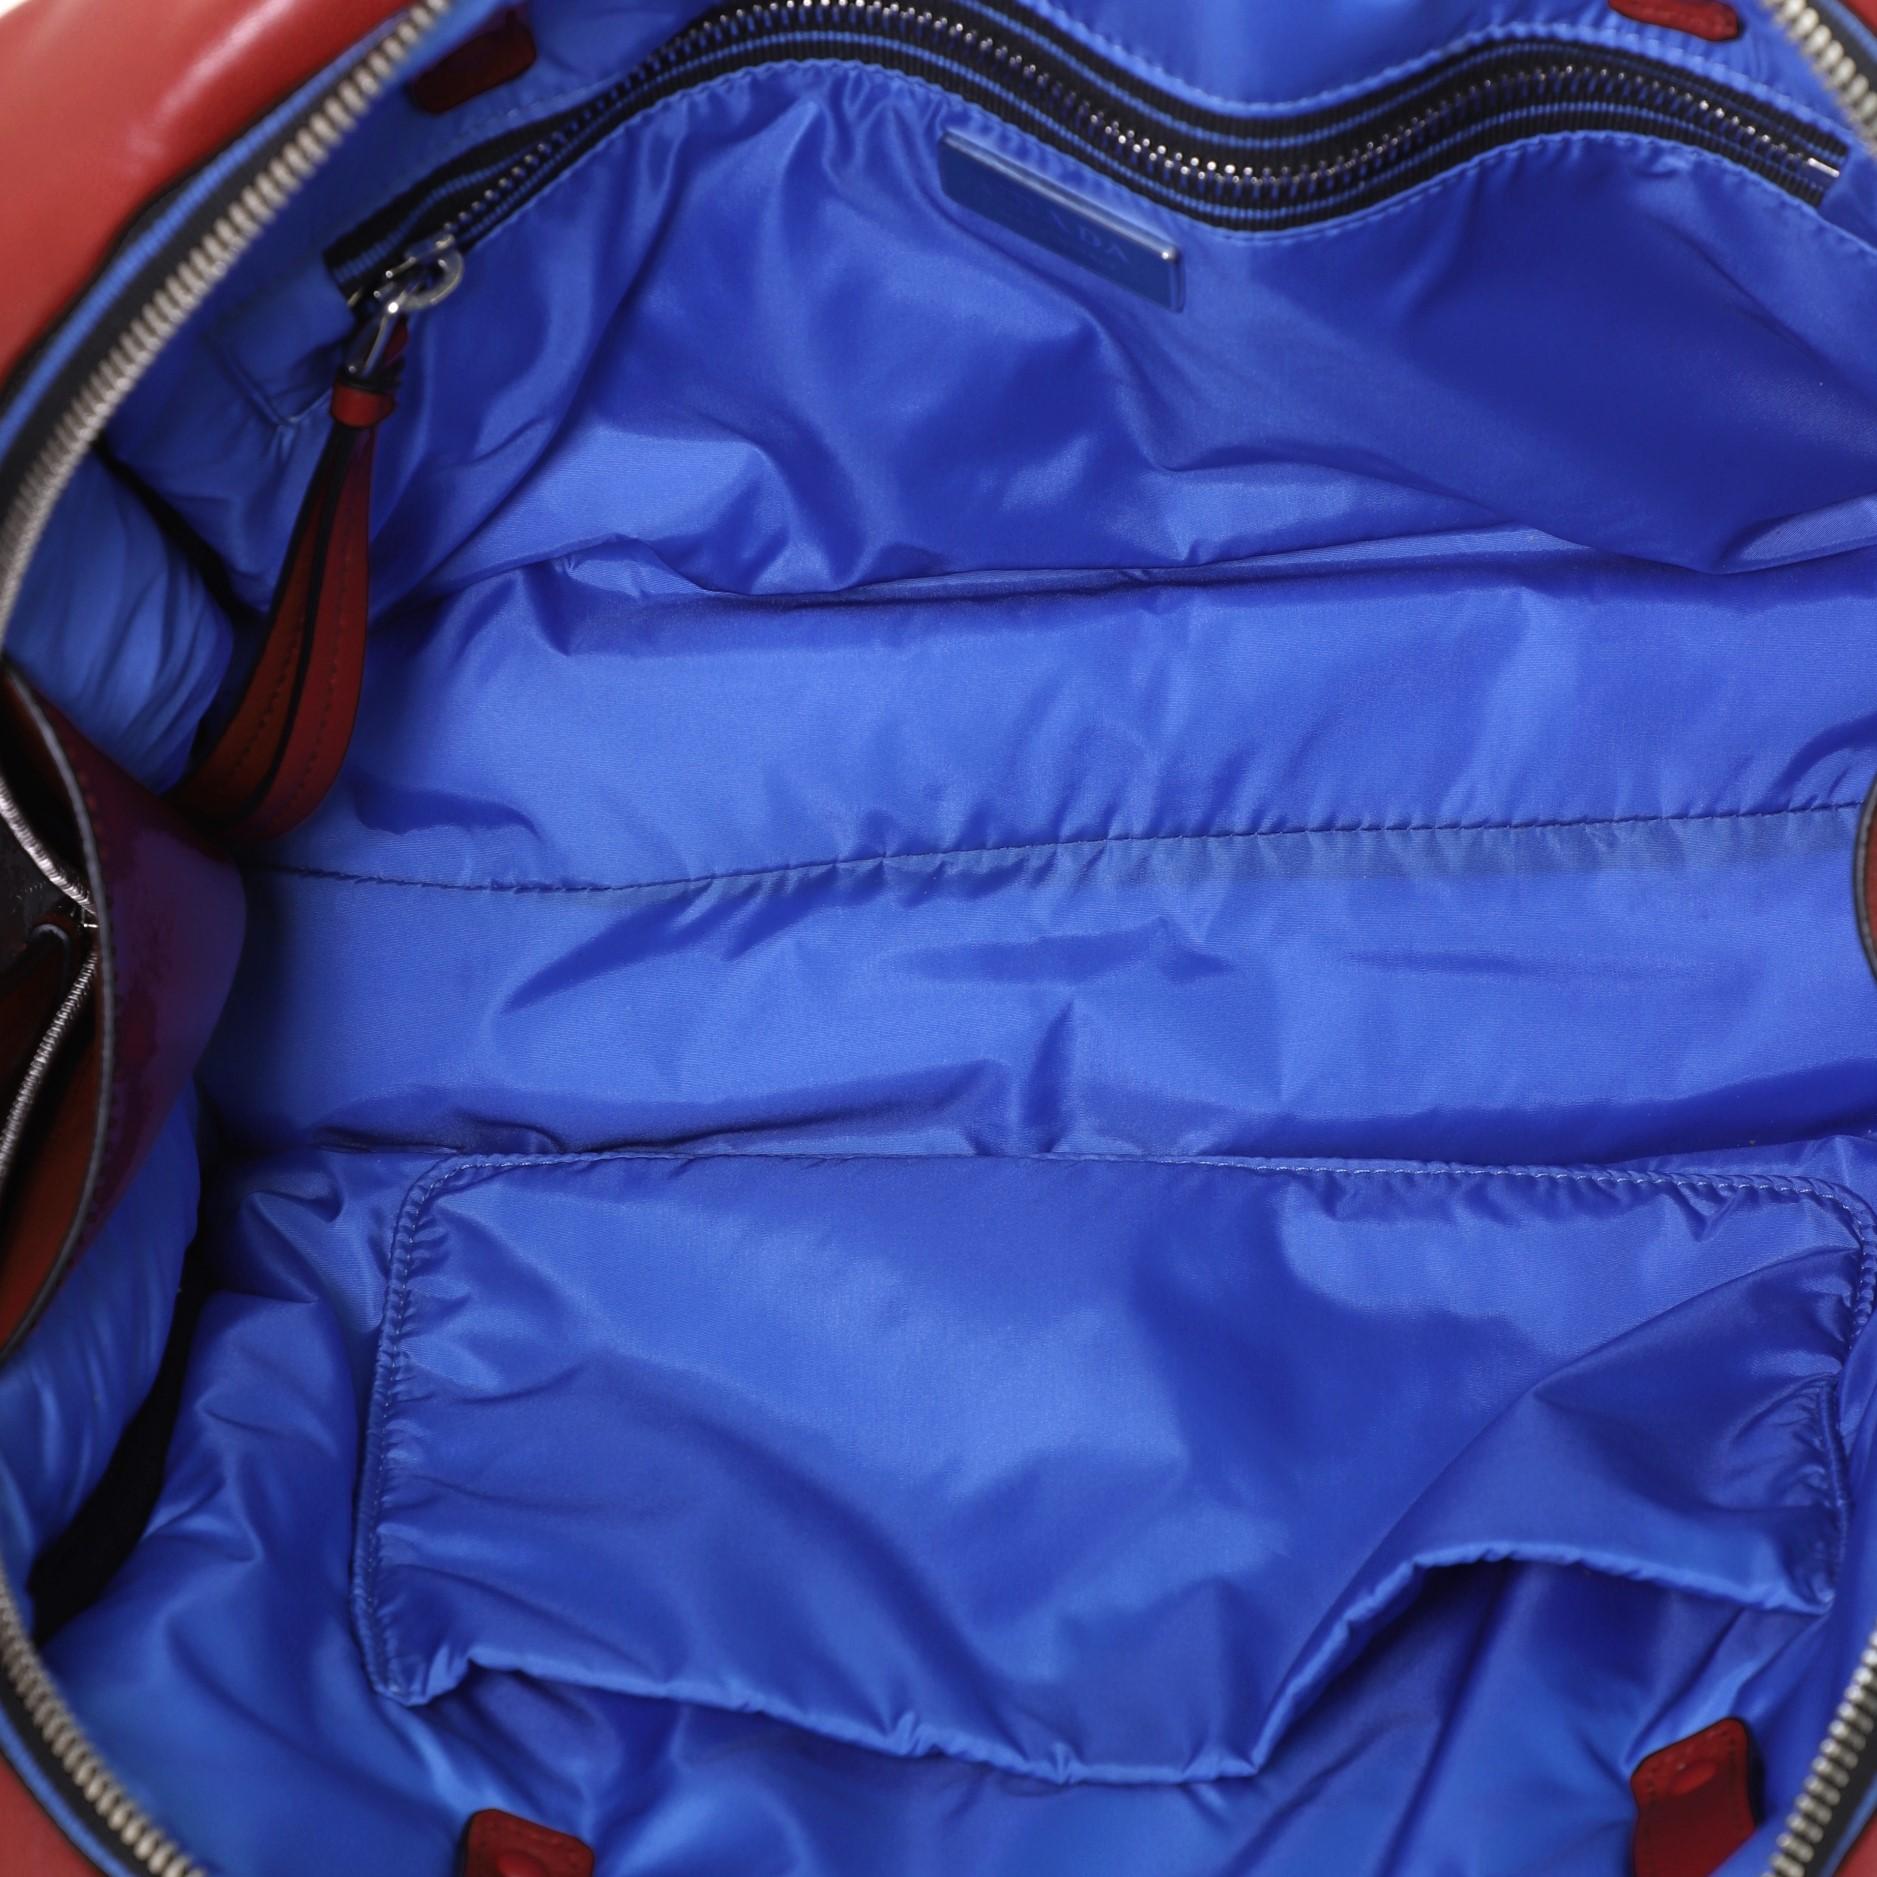 Women's or Men's Prada Padded Bowler Bag Nappa Leather Medium